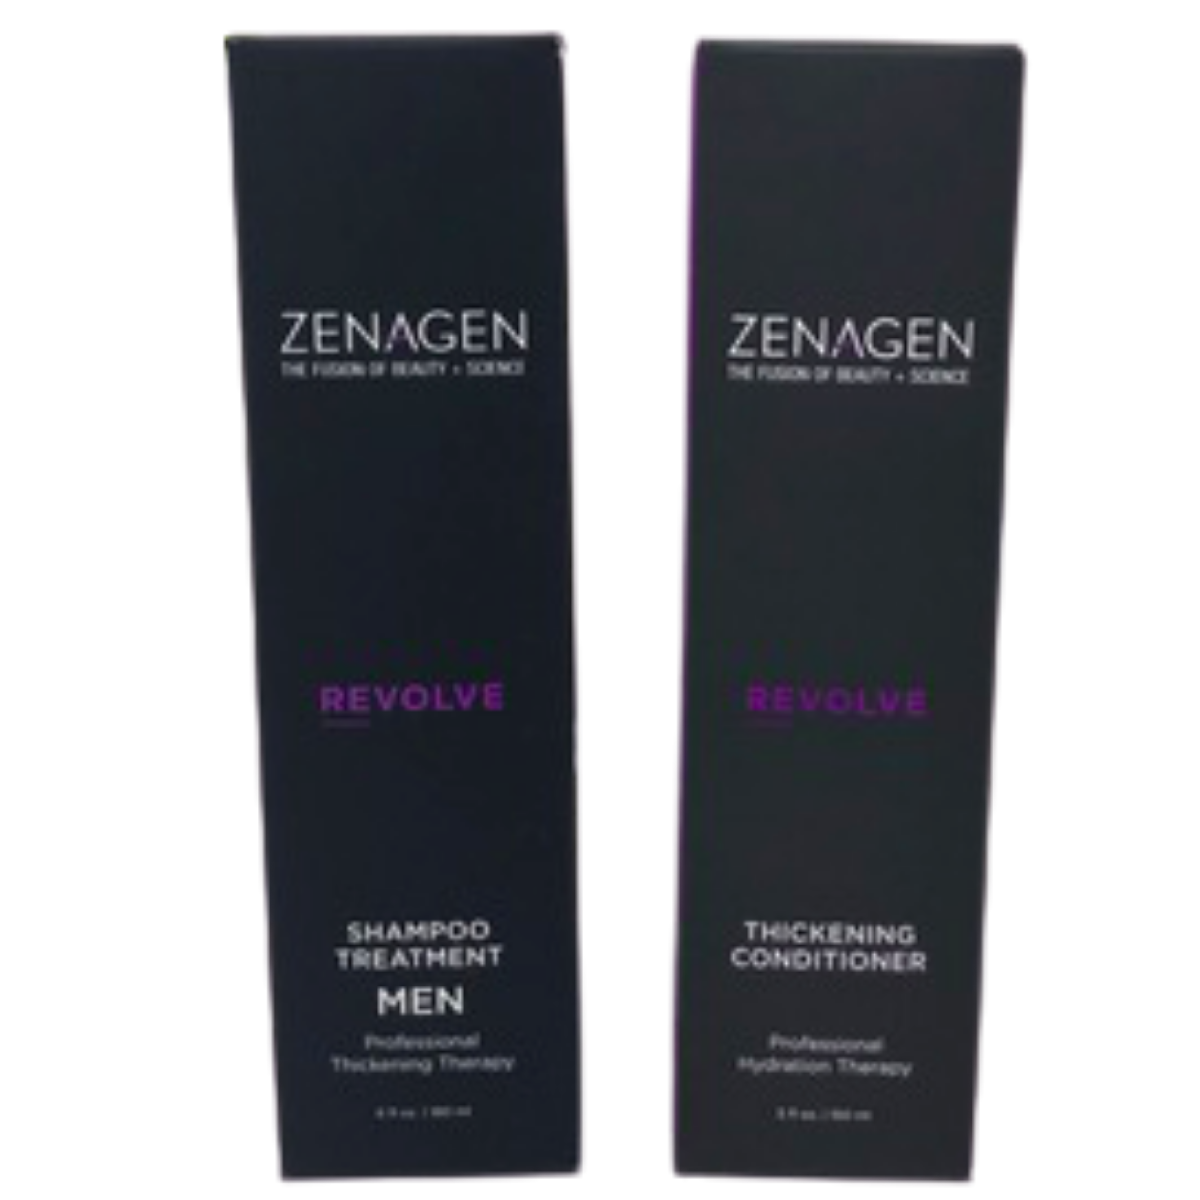 Zenagen Revolve Shampoo Treatment For Men 6 Oz And Thickening Conditione 4prostylists